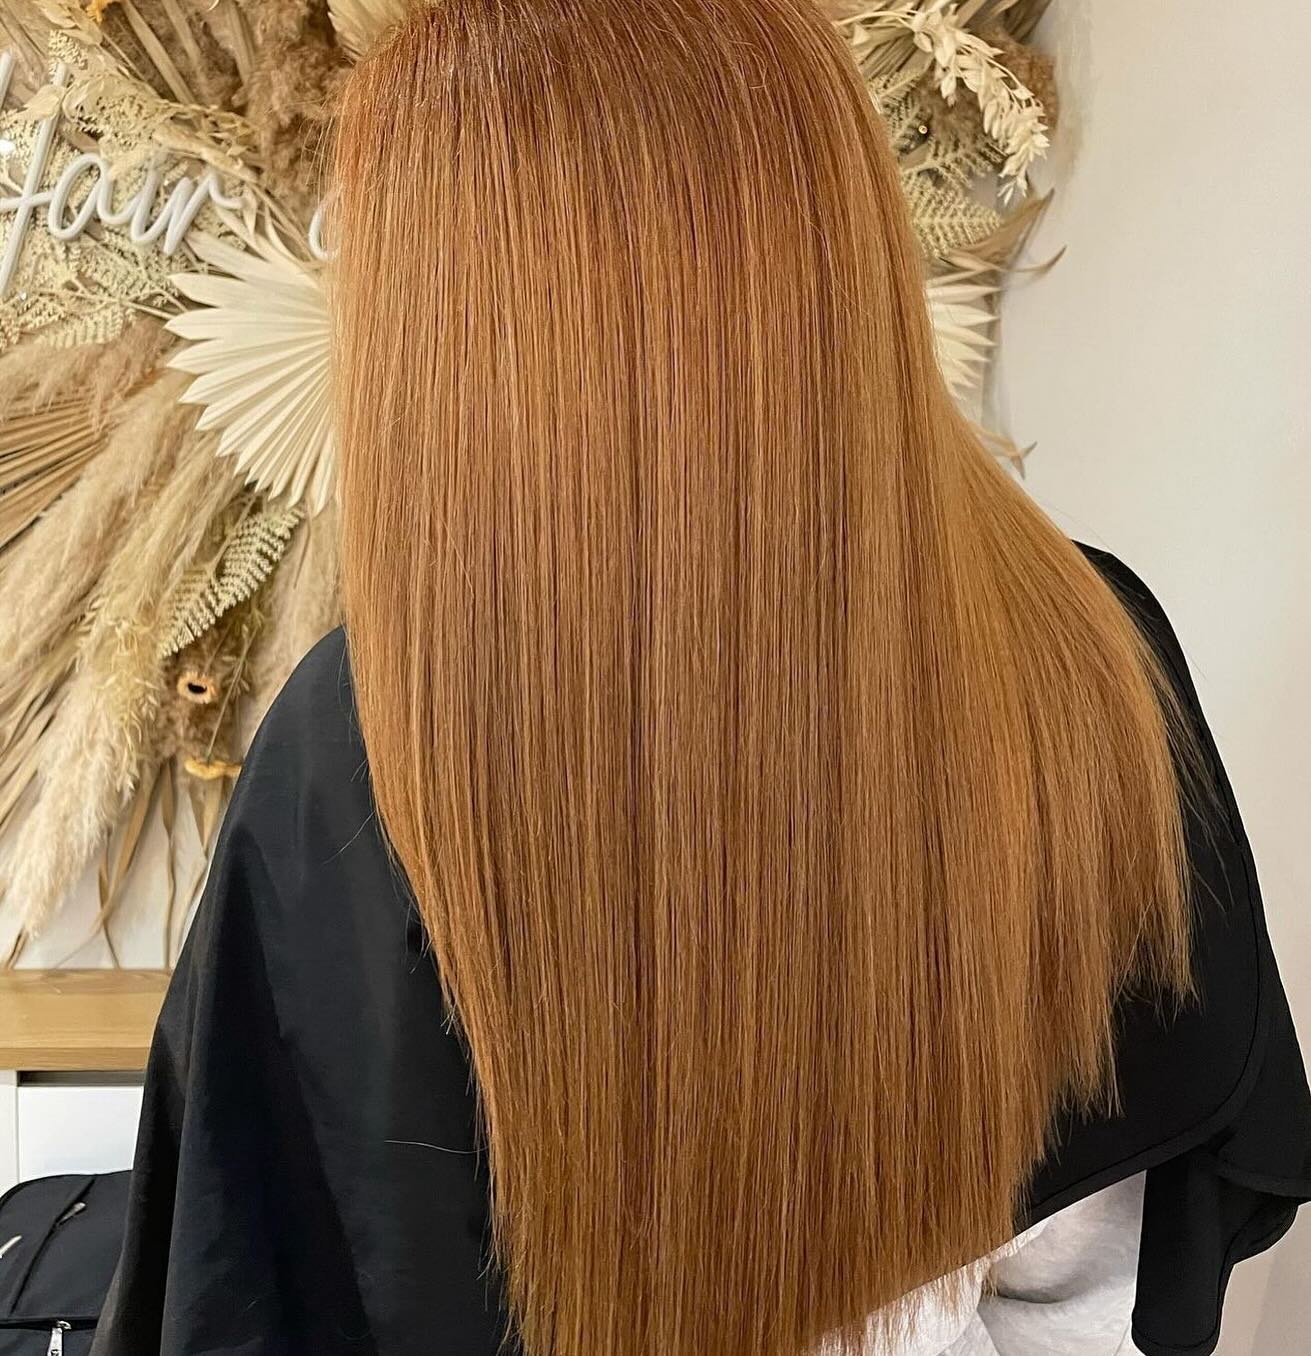 sᴛʀᴀᴡʙᴇʀʀʏ ʙʟᴏɴᴅᴇ 🍓

ᴀɴ ᴀʙsᴏʟᴏᴜᴛᴇ ᴛʀᴇɴᴅ ᴛʜɪs ʏᴇᴀʀ ꜰᴏʀ ᴛʜᴏsᴇ ᴍᴏʀᴇ ɴᴀᴛᴜʀᴀʟ ᴀᴜʙᴜʀɴs 

ʜᴀɪʀ ʙʏ @hair_by_kimmie_hendry 
@afbeautystudio

ᴜsɪɴɢ @matrix @olaplex 

#strawberryblonde #auburnhair #hairtrends2024 #hairtrendsummer #redhead #naturalauburnhair